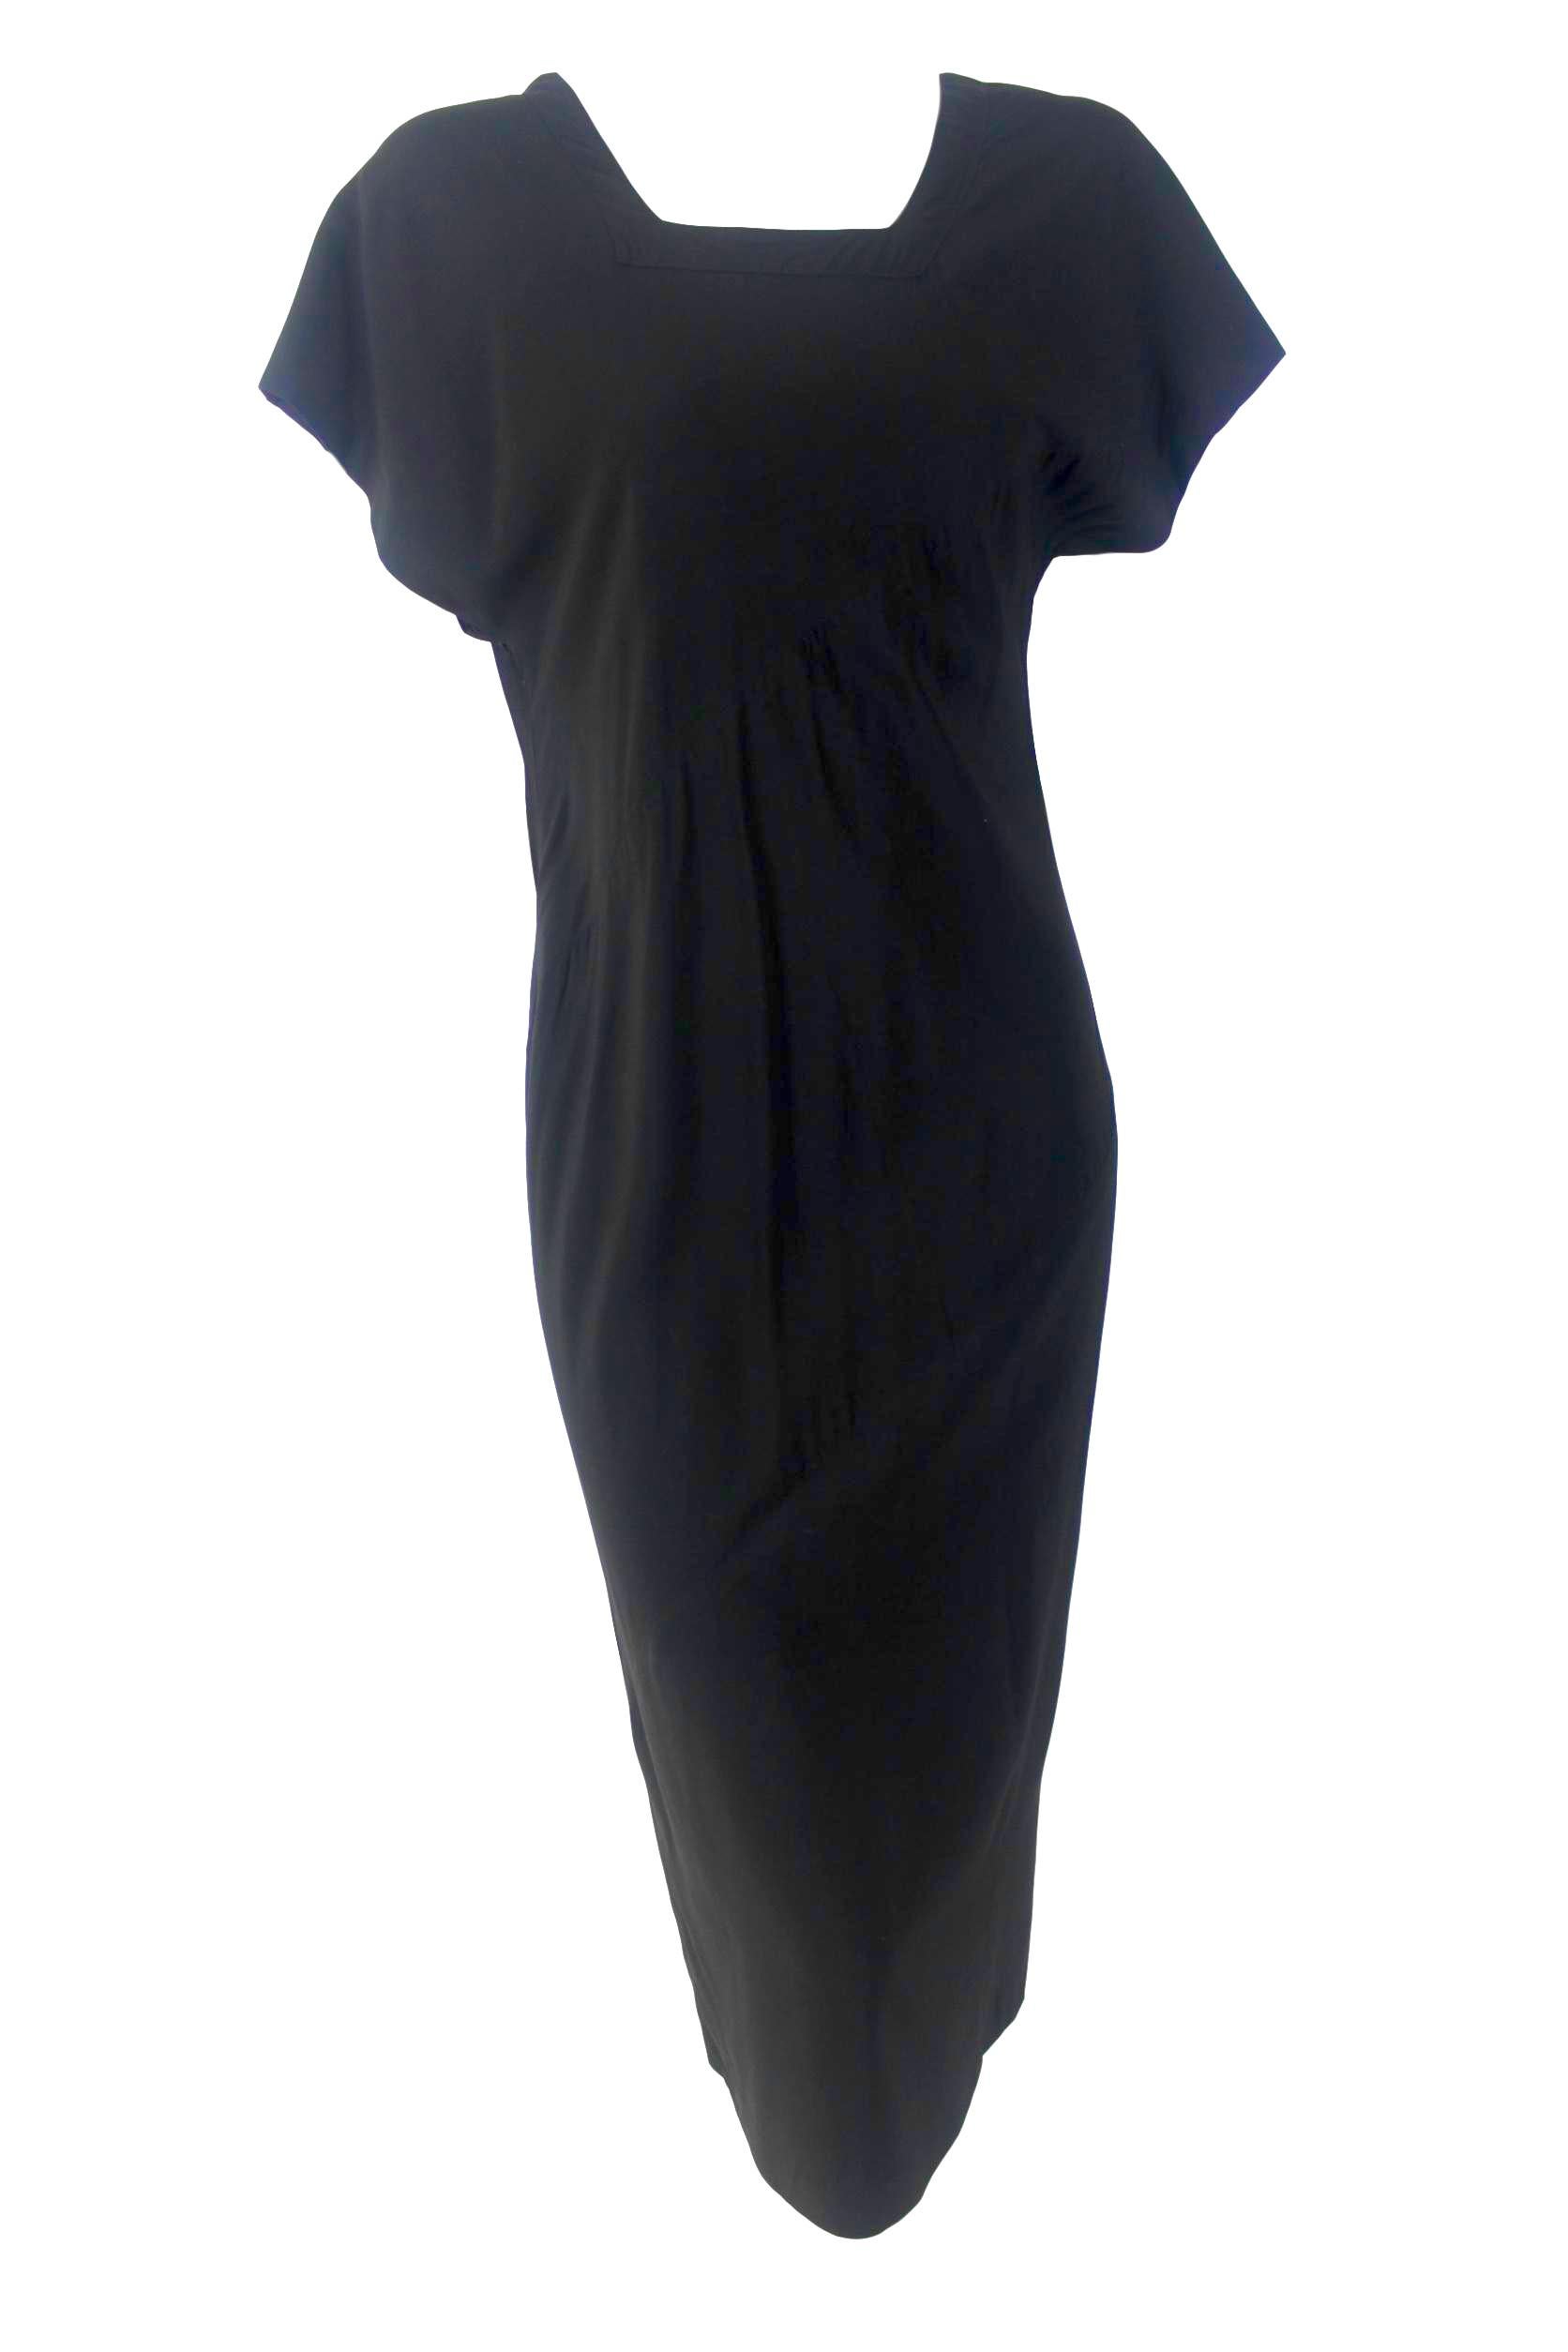 John Galliano Black Bias Cut Silk Dress Made in England Label For Sale 2